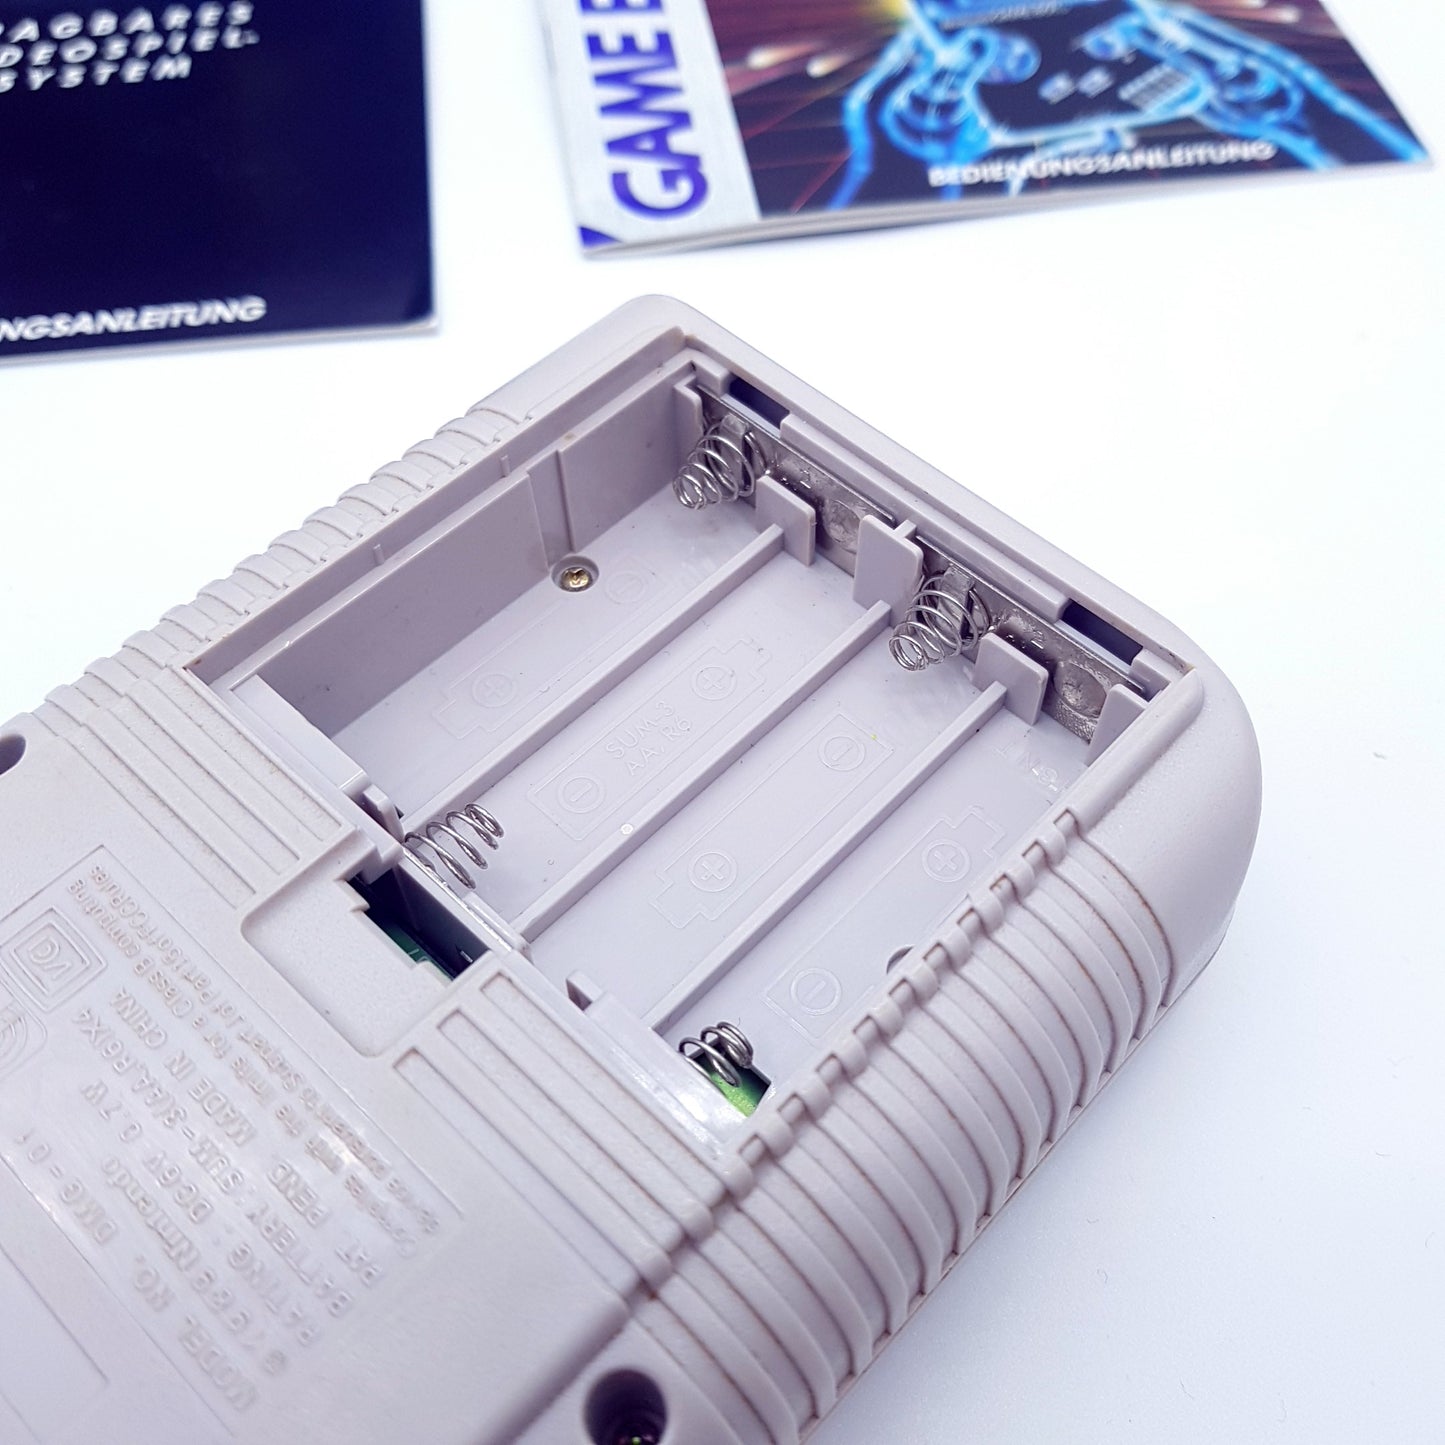 Nintendo Gameboy Konsole inkl OVP, Anleitung & Spiel Tetris - gebraucht